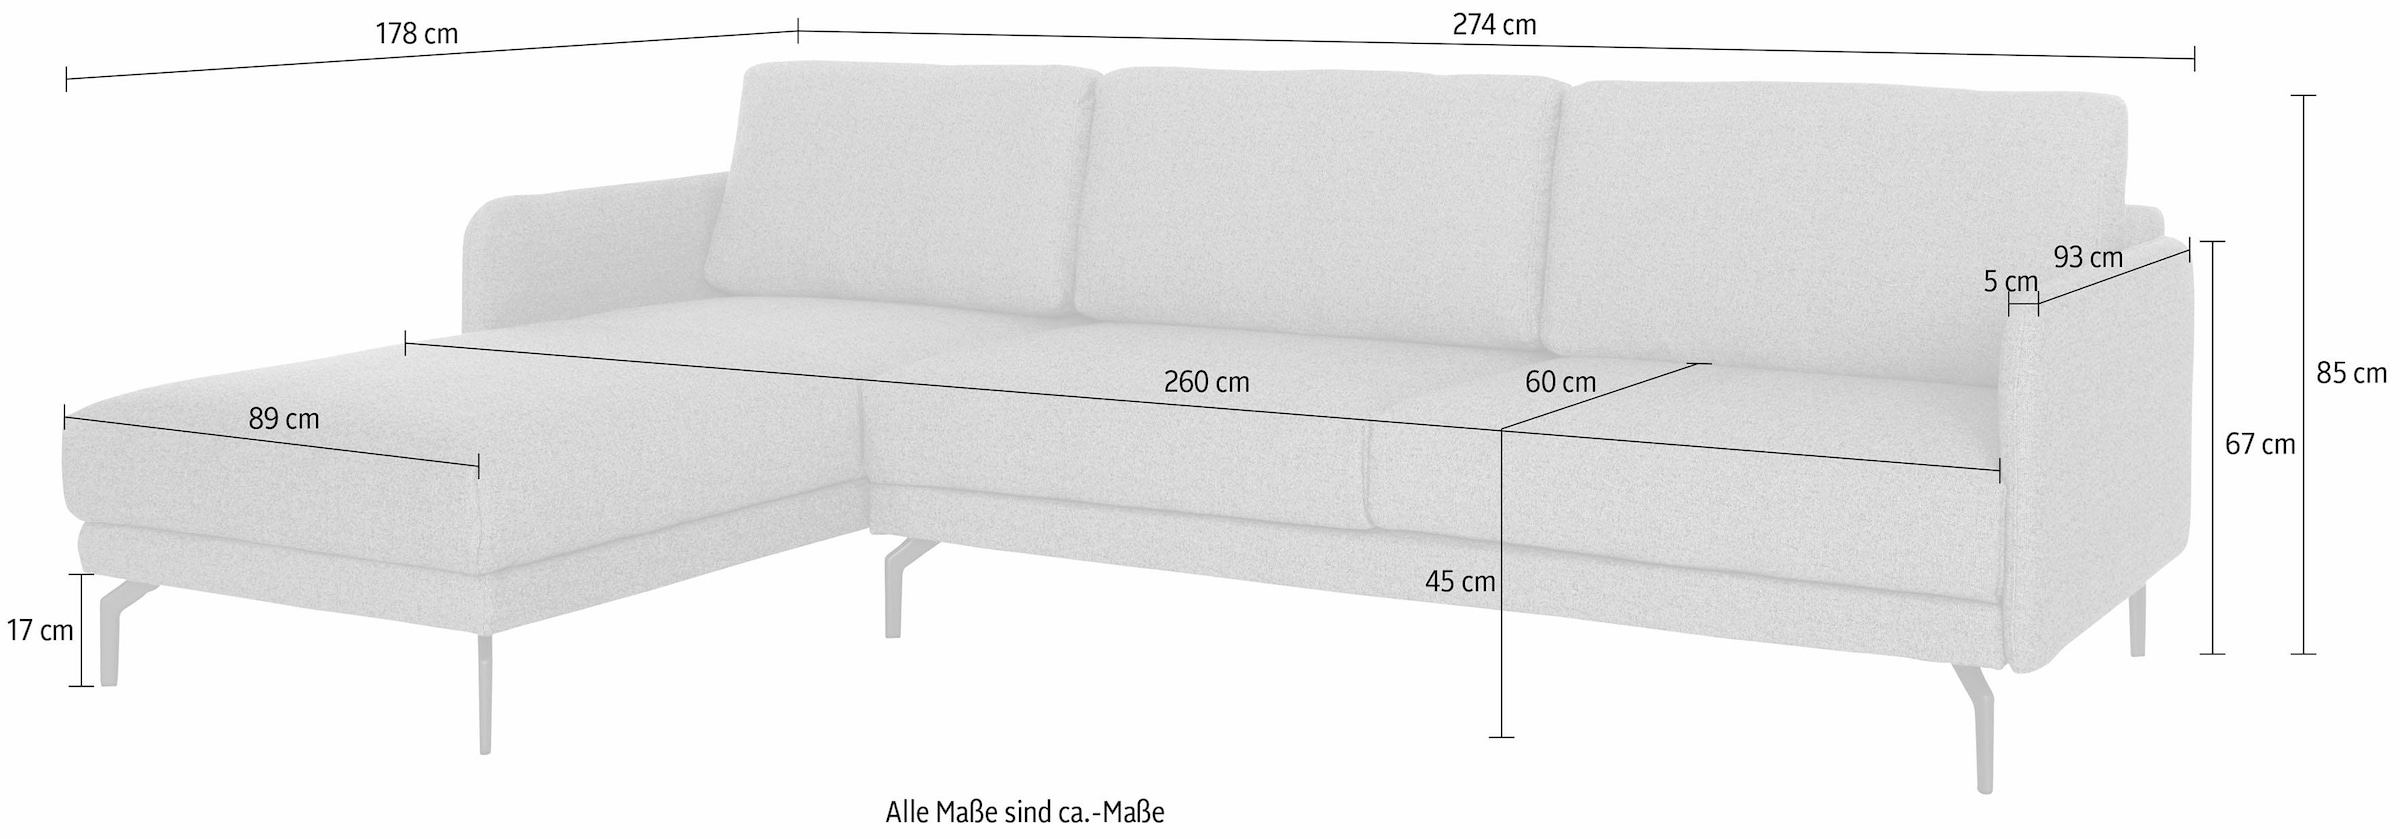 hülsta sofa Ecksofa »hs.450«, Armlehne Umbragrau Alugussfuß Breite OTTO schmal, 274 Online sehr Shop cm